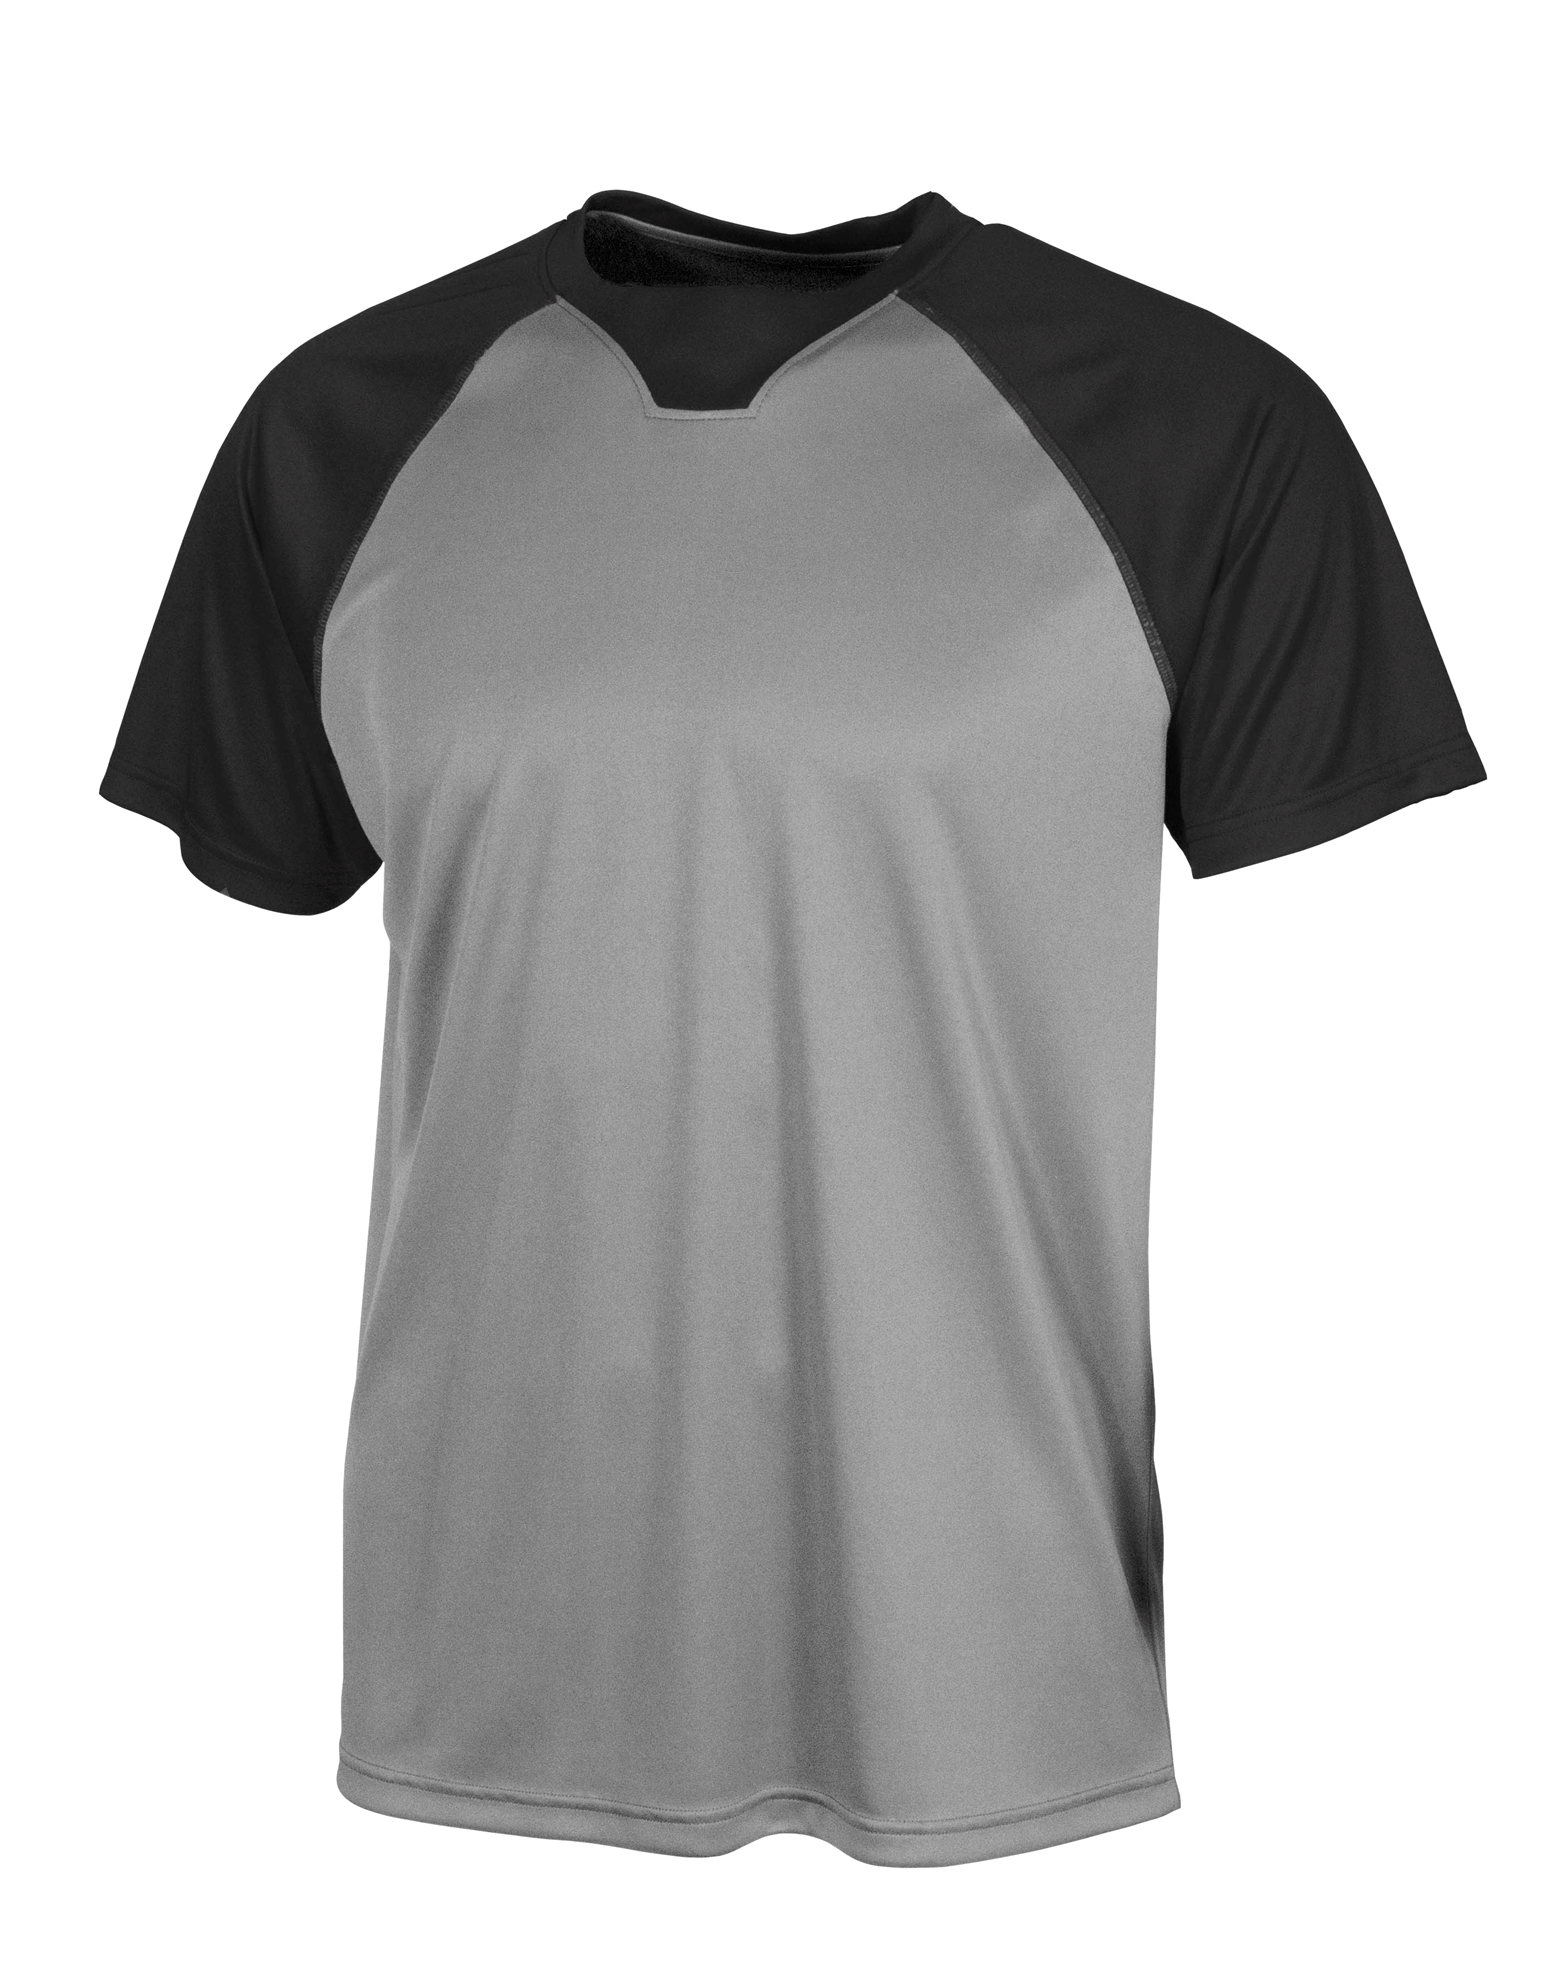 BAW Athletic Wear XT126 - Men's XT Baseball T-Shirt